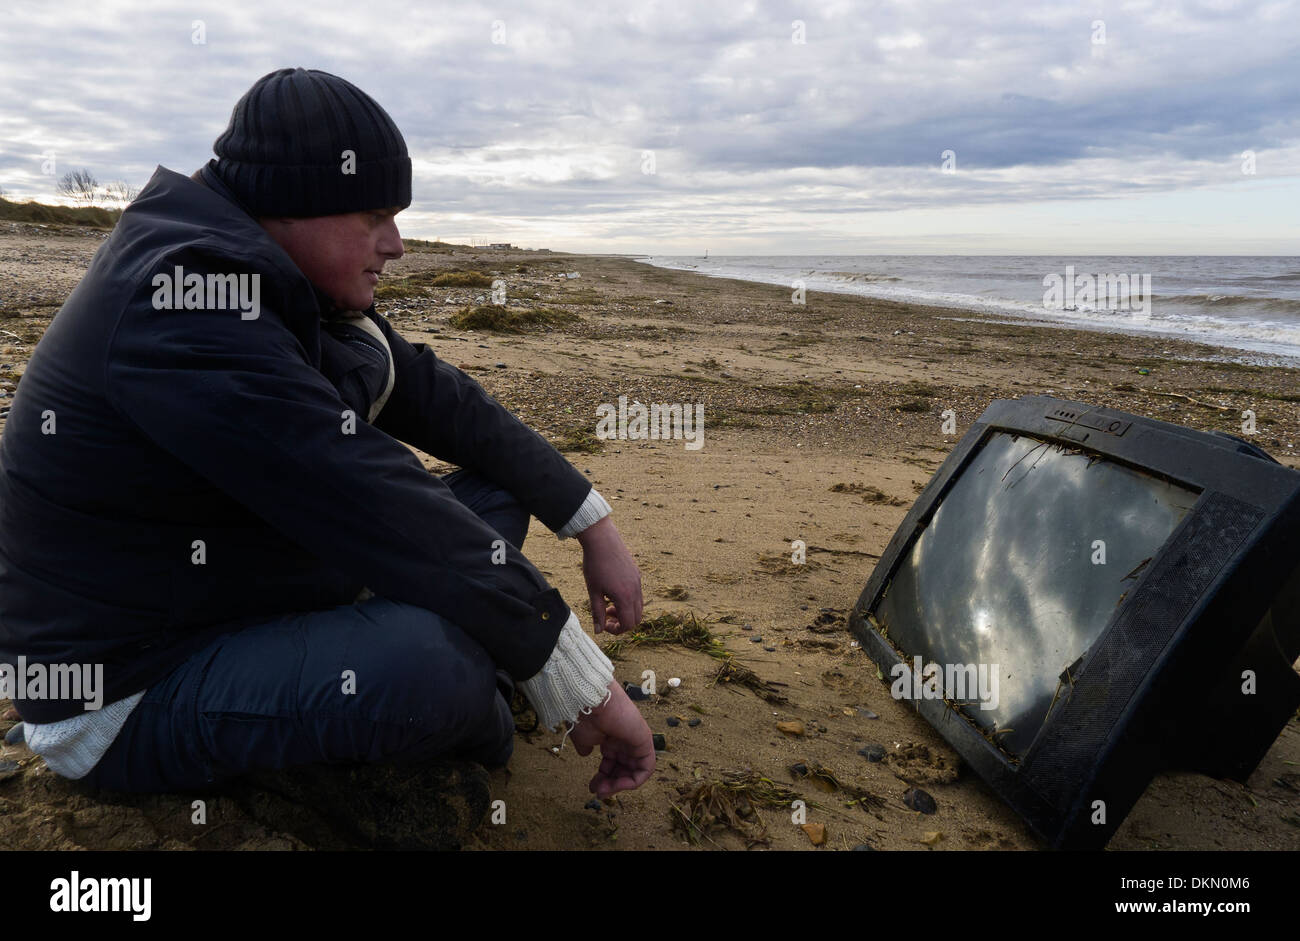 Mann beobachtet einen Fernseher an einen Strand gespült. Stockfoto